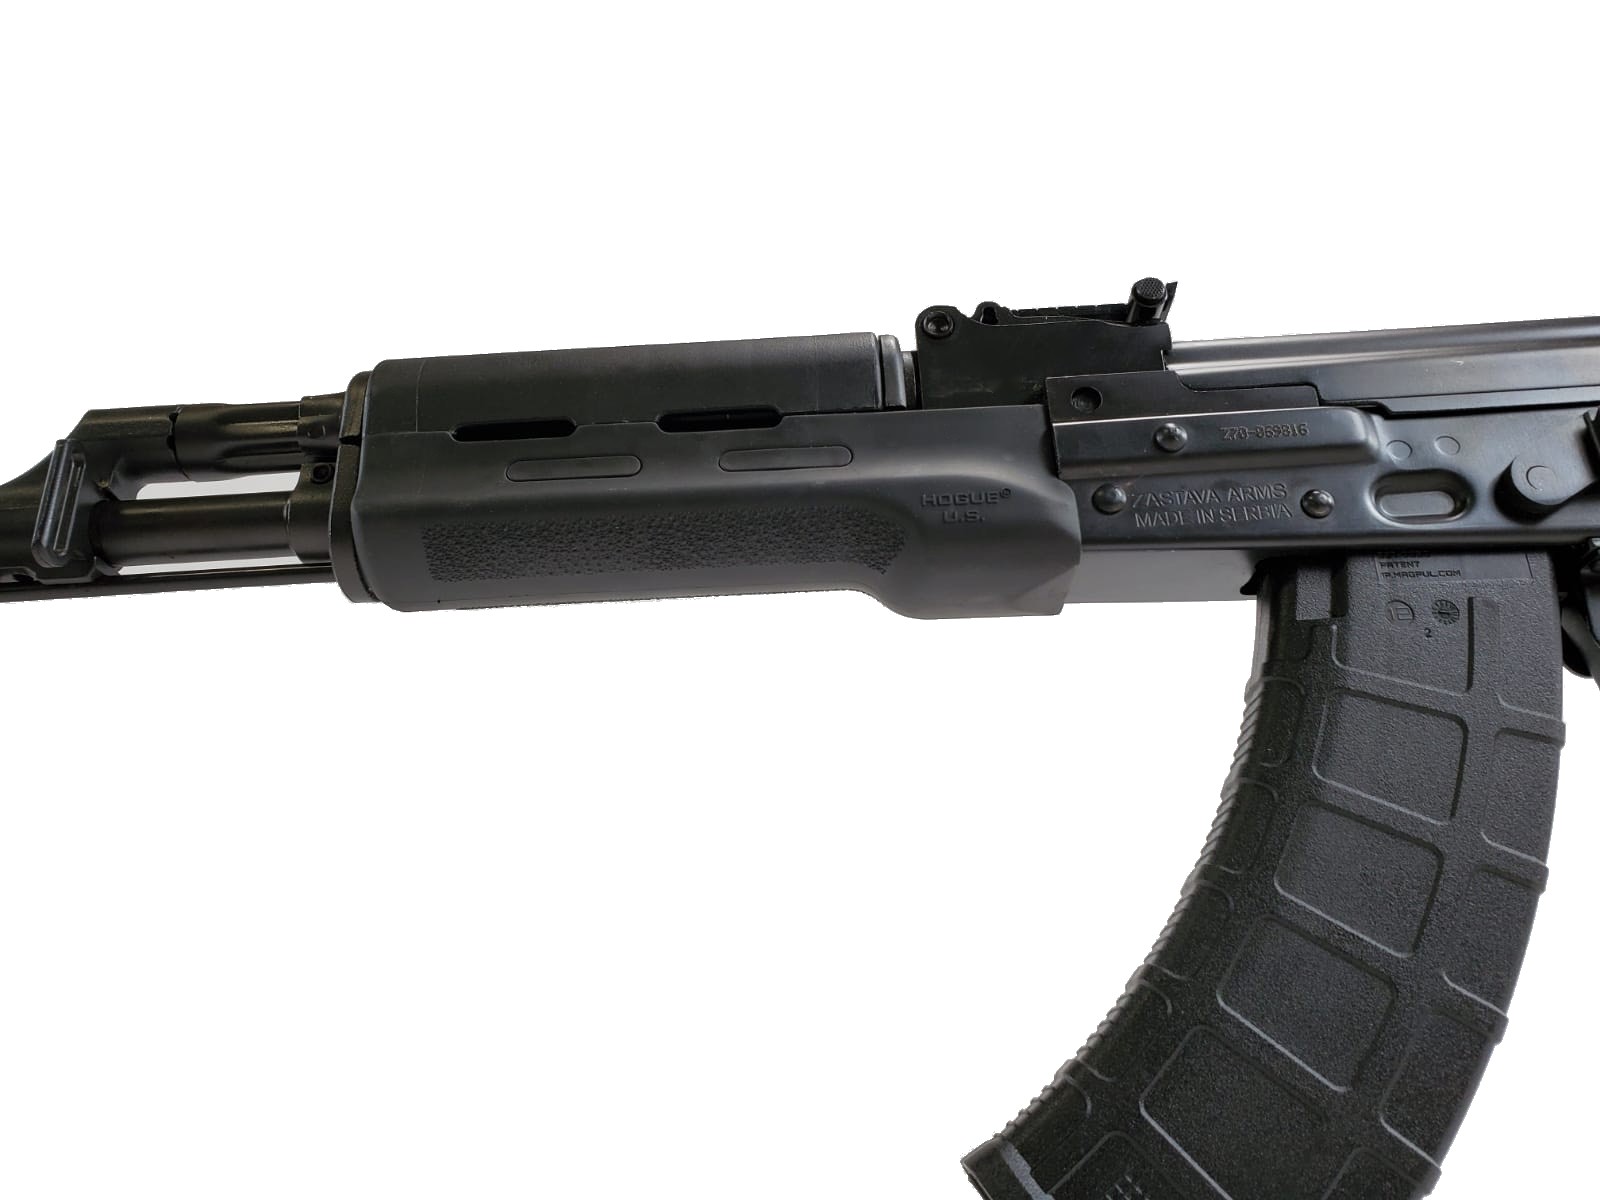 black ak rifle zpap zastava m70 7.62x39mm polymer furniture alt 2 angle